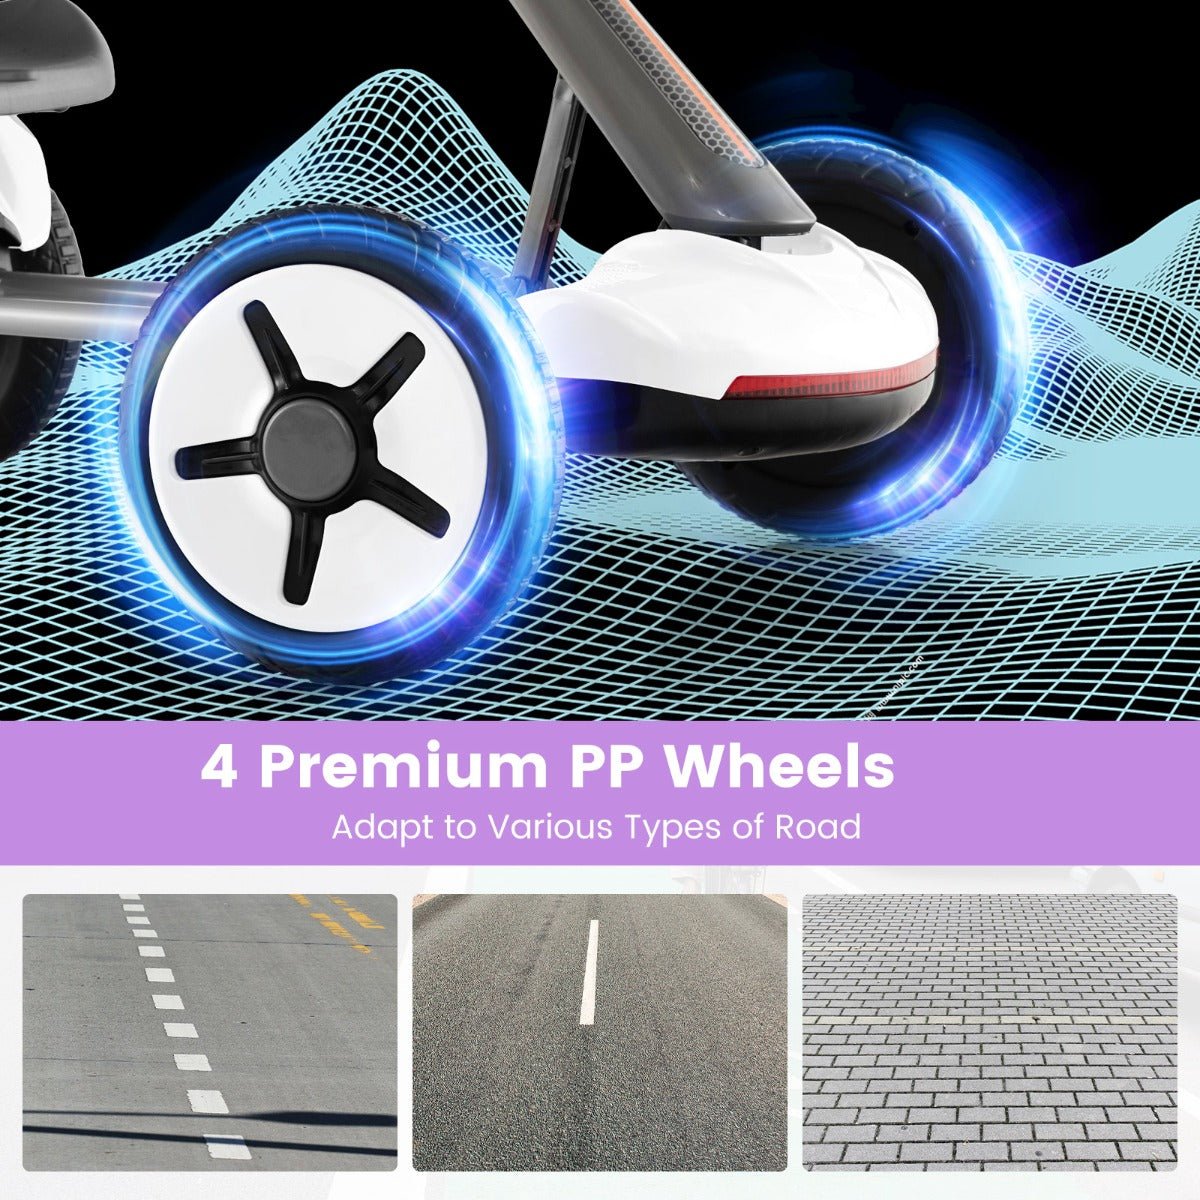 Premium wheels Foldable Go Kart for Easy Storage and Transport